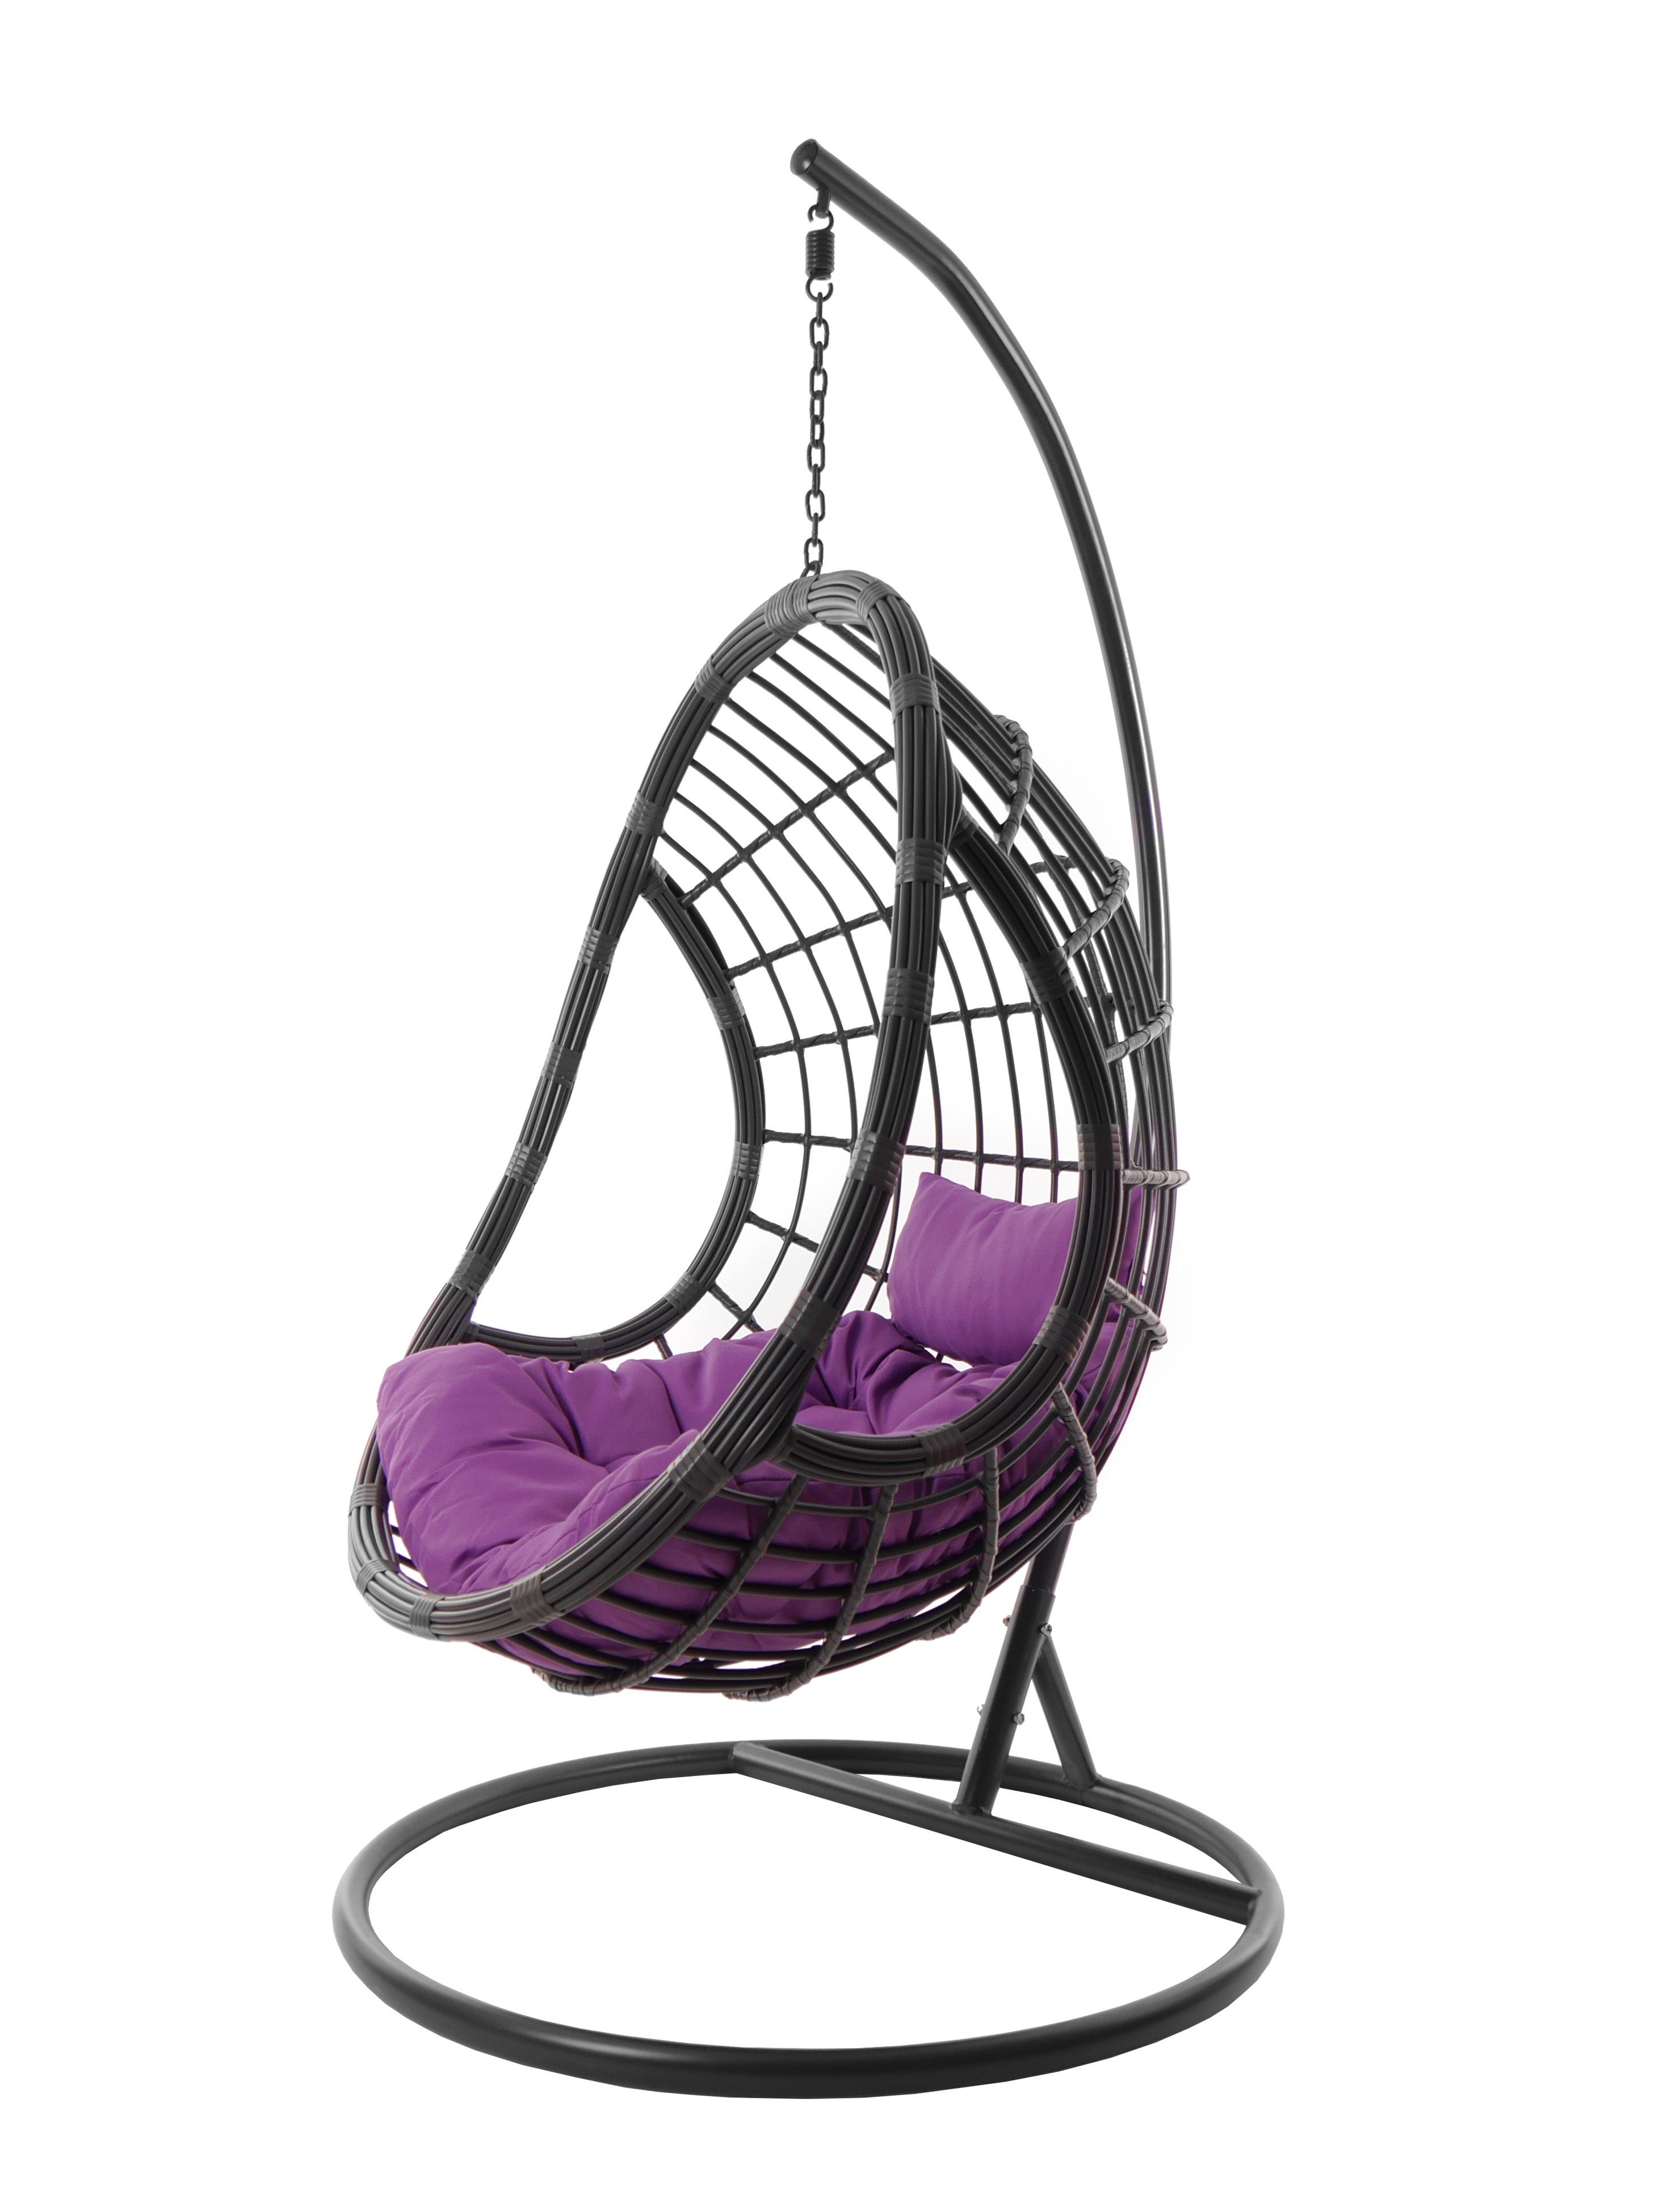 Kissen in grau, Hängesessel violet) (4050 inklusive PALMANOVA eleganter KIDEO grau, lila Hängestuhl Hängesessel und Gestell